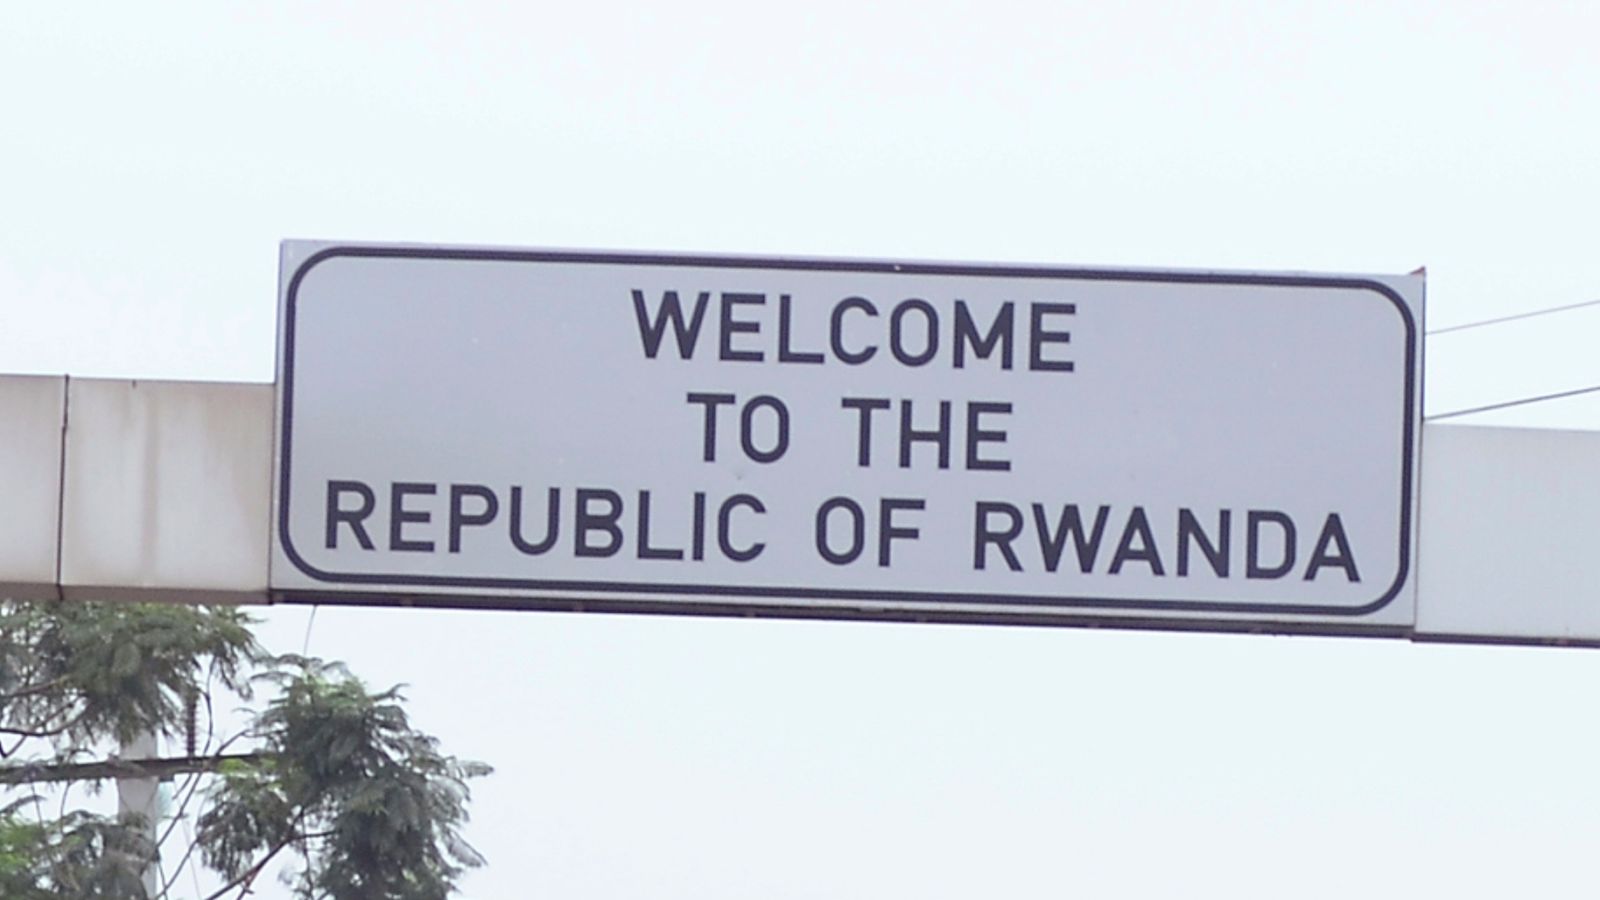 Cost of stalled Rwanda asylum scheme could soar to £500m, watchdog says